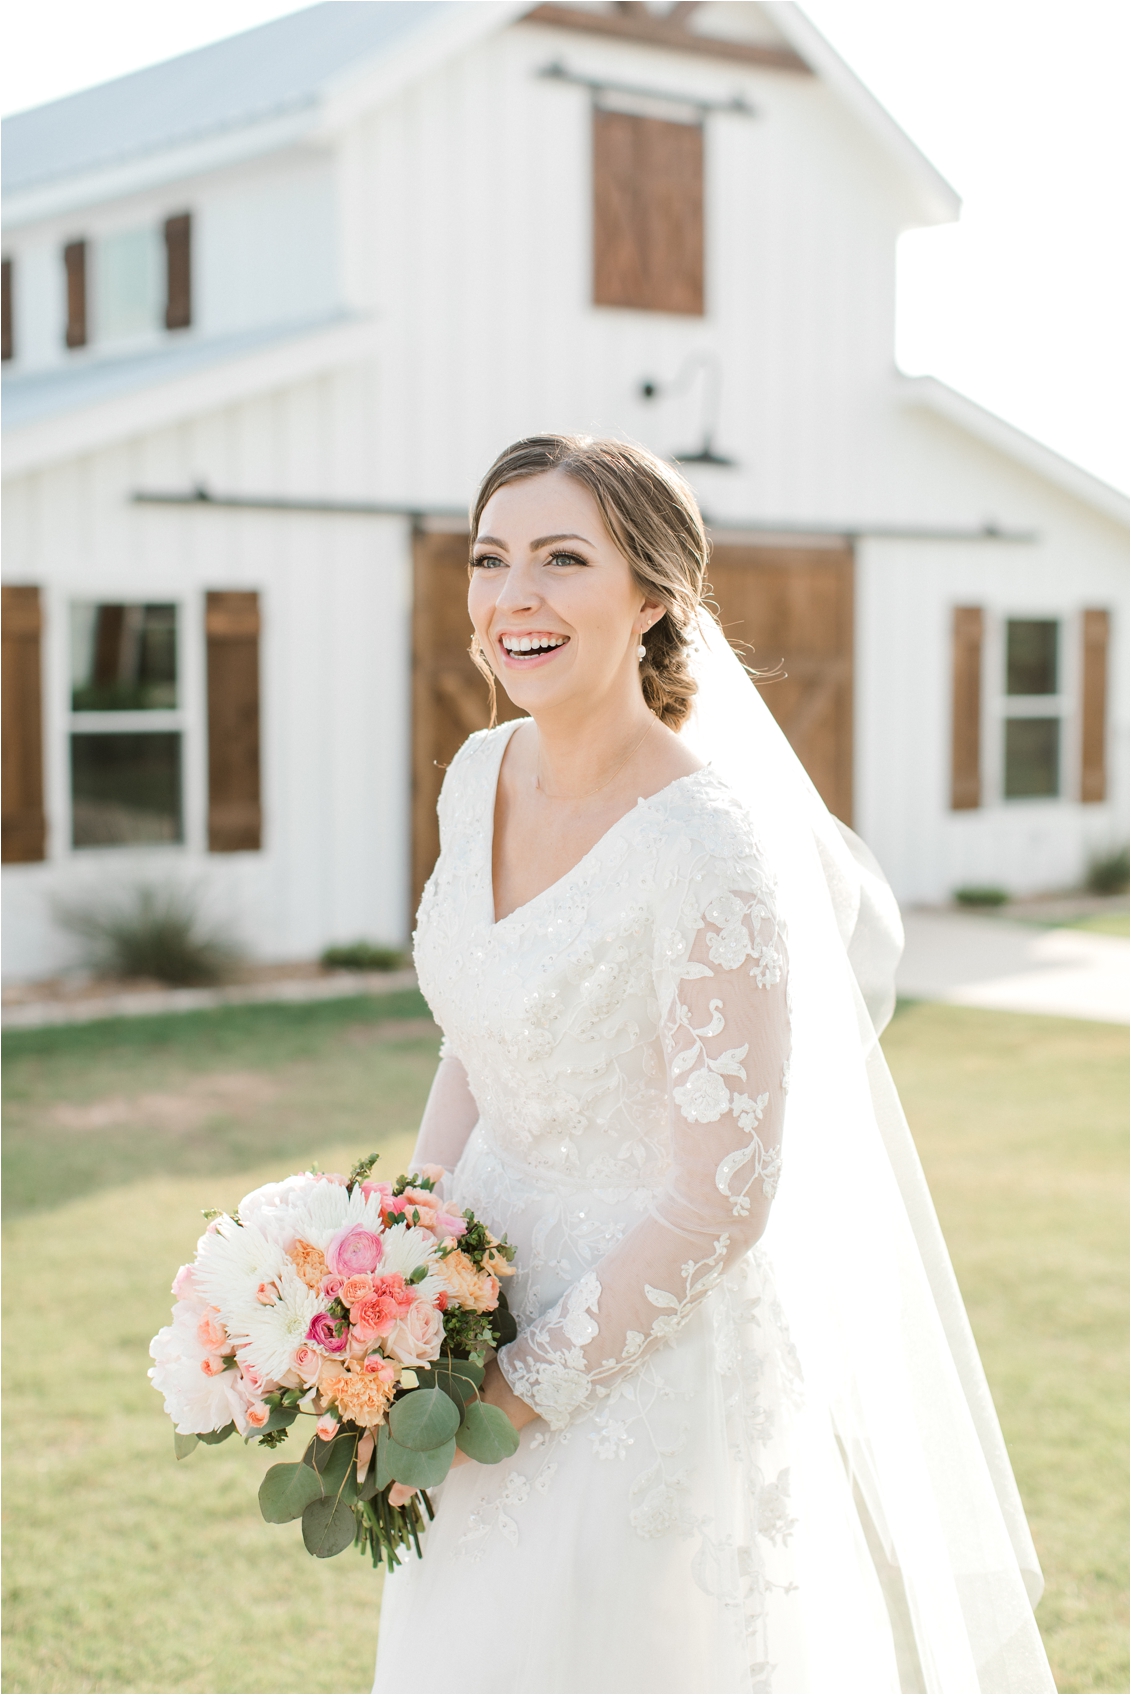 Five Oaks Farm Wedding in Cleburne, Texas by Gaby Caskey Photography, bride and groom portraits, white barn wedding, barn wedding day inspiration, bridal portraits